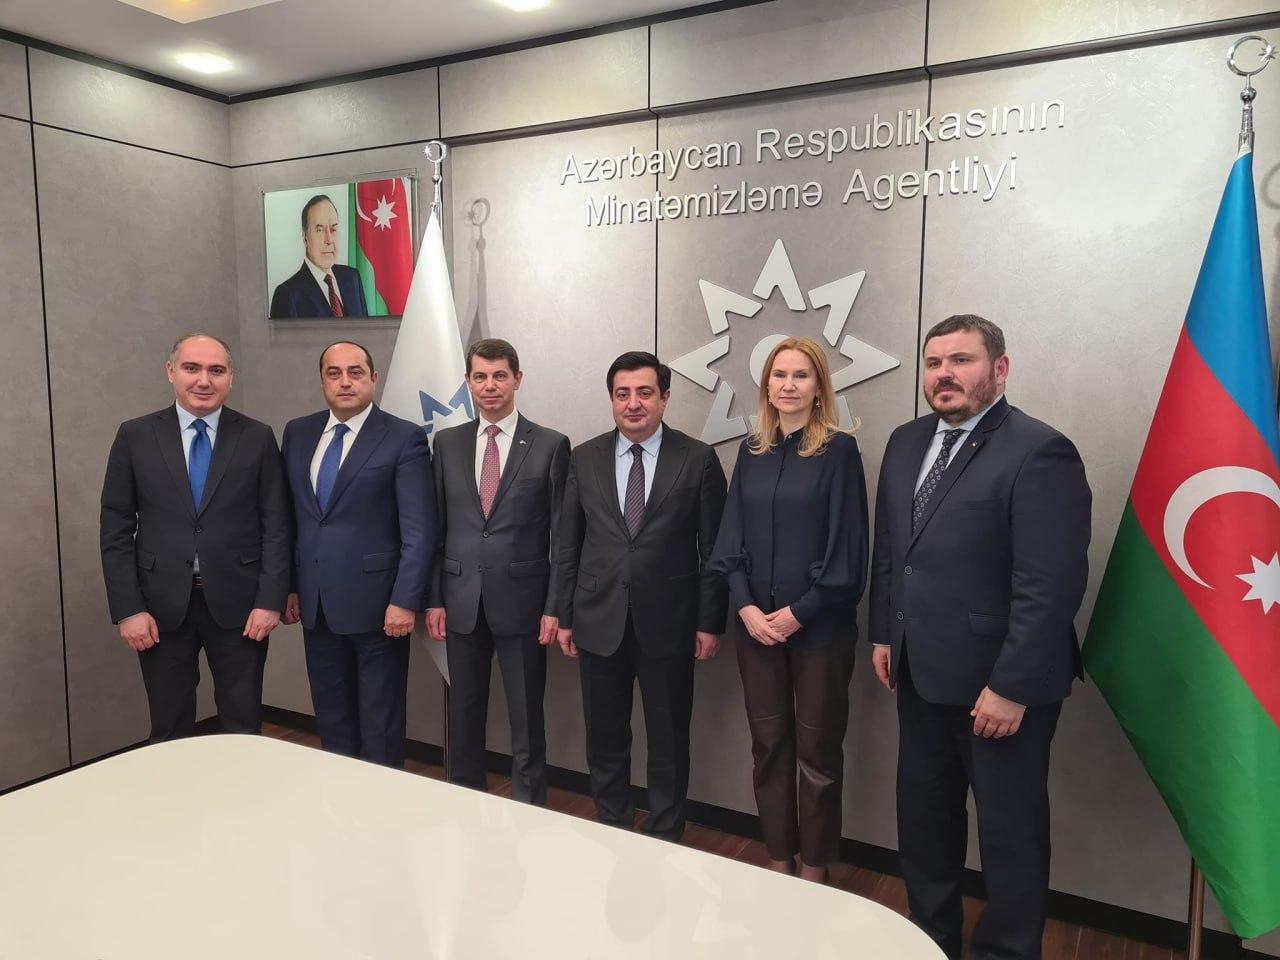 Parliament vice-speaker: Demining territories - problem uniting Azerbaijan and Ukraine